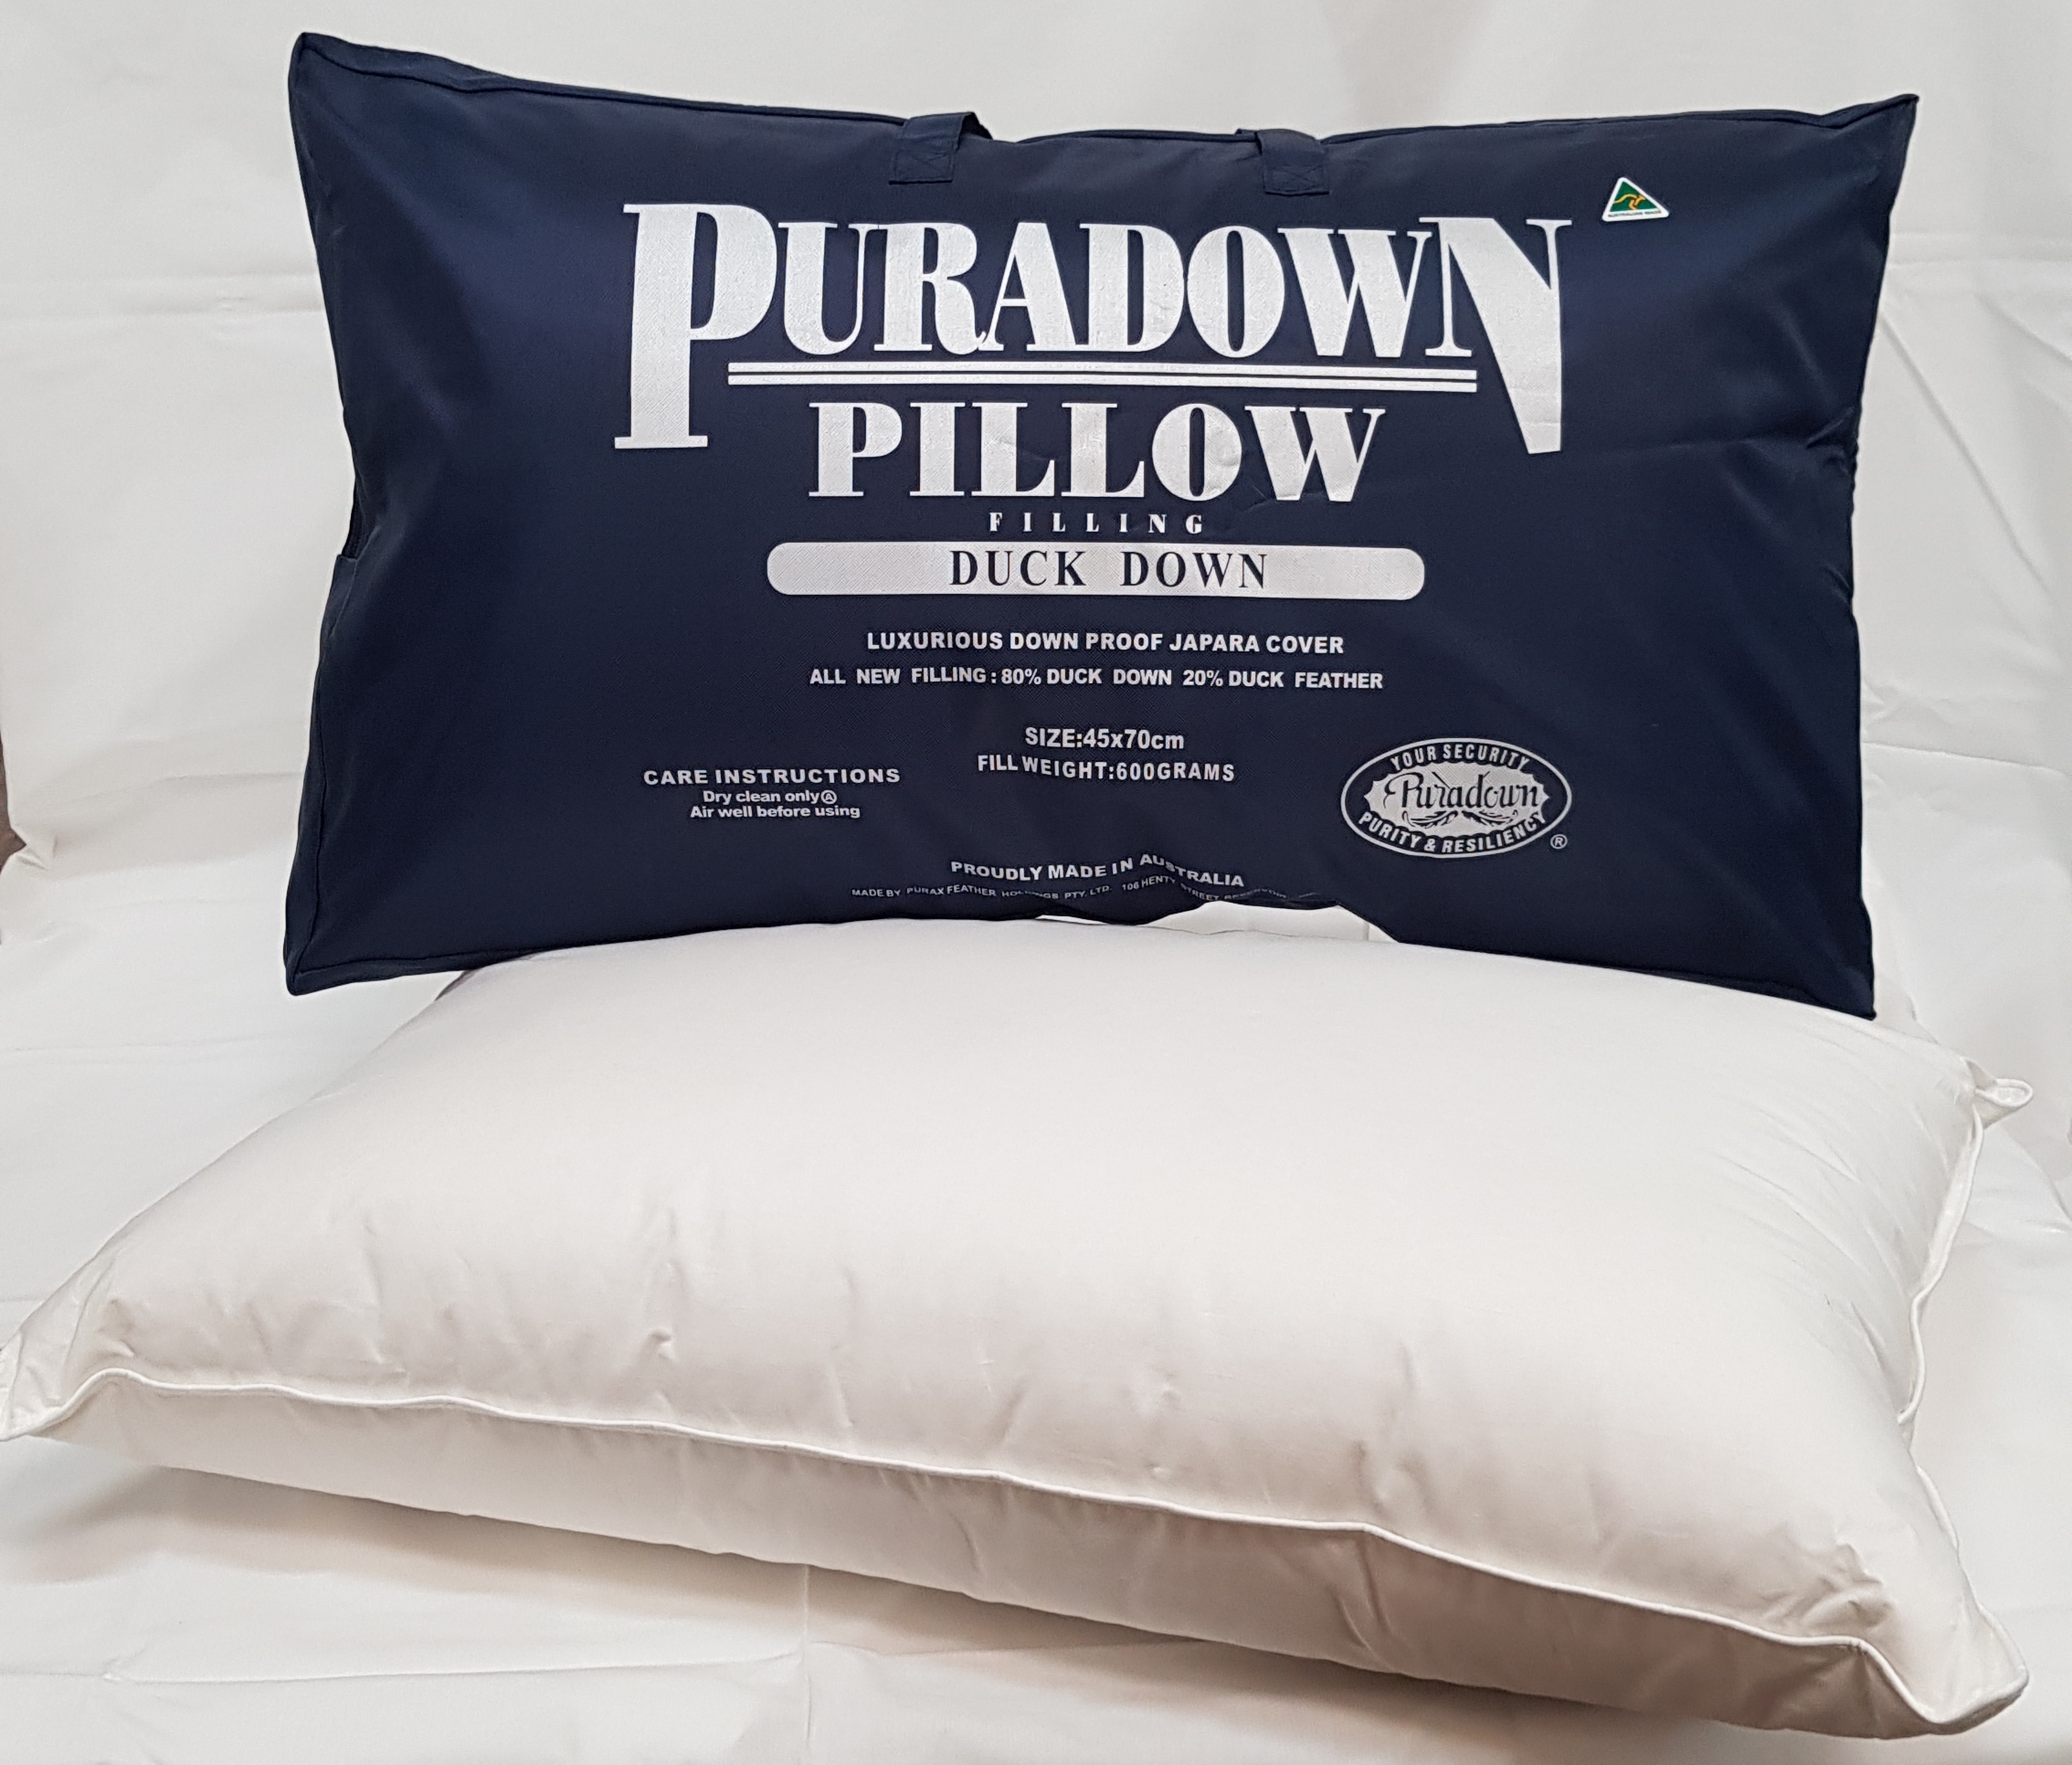 Purax Feather down Pillow - Cooks Lingerie & Manchester